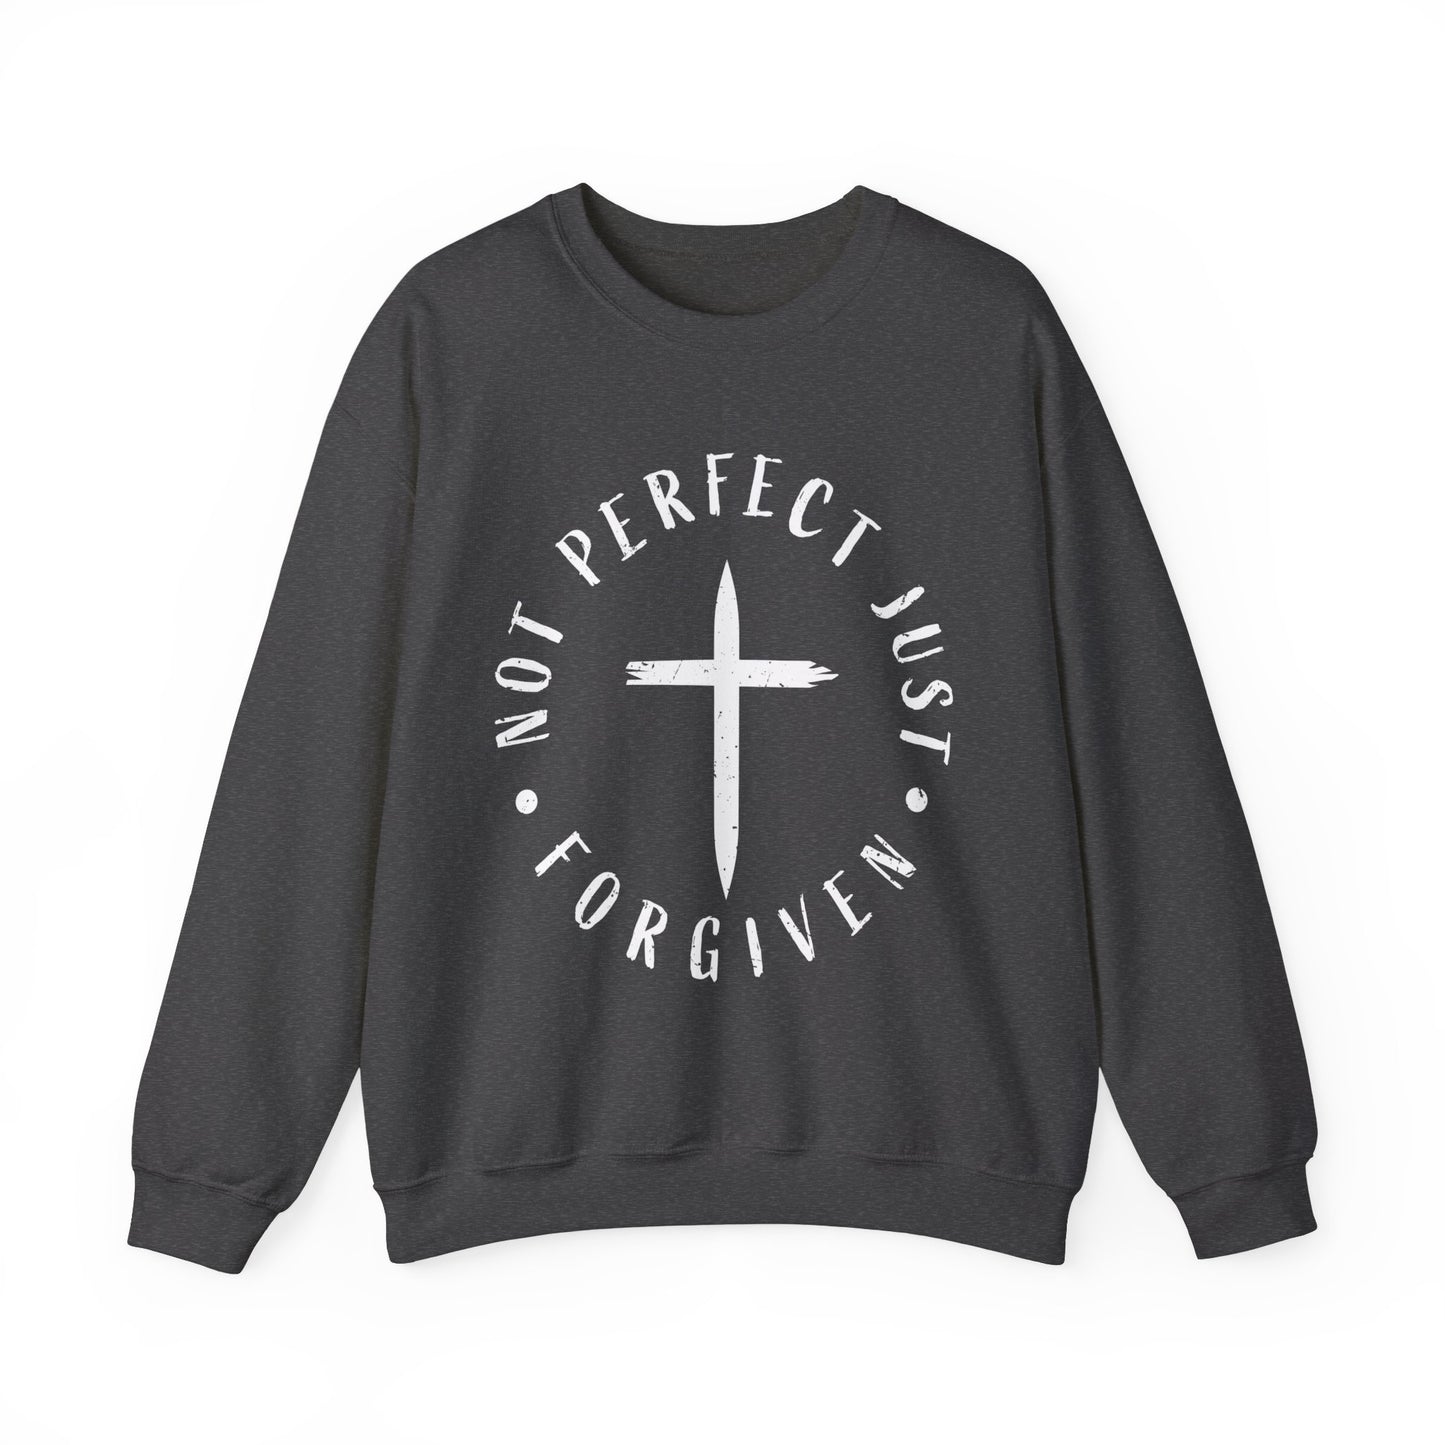 Forgiven Women's Easter Sweatshirt